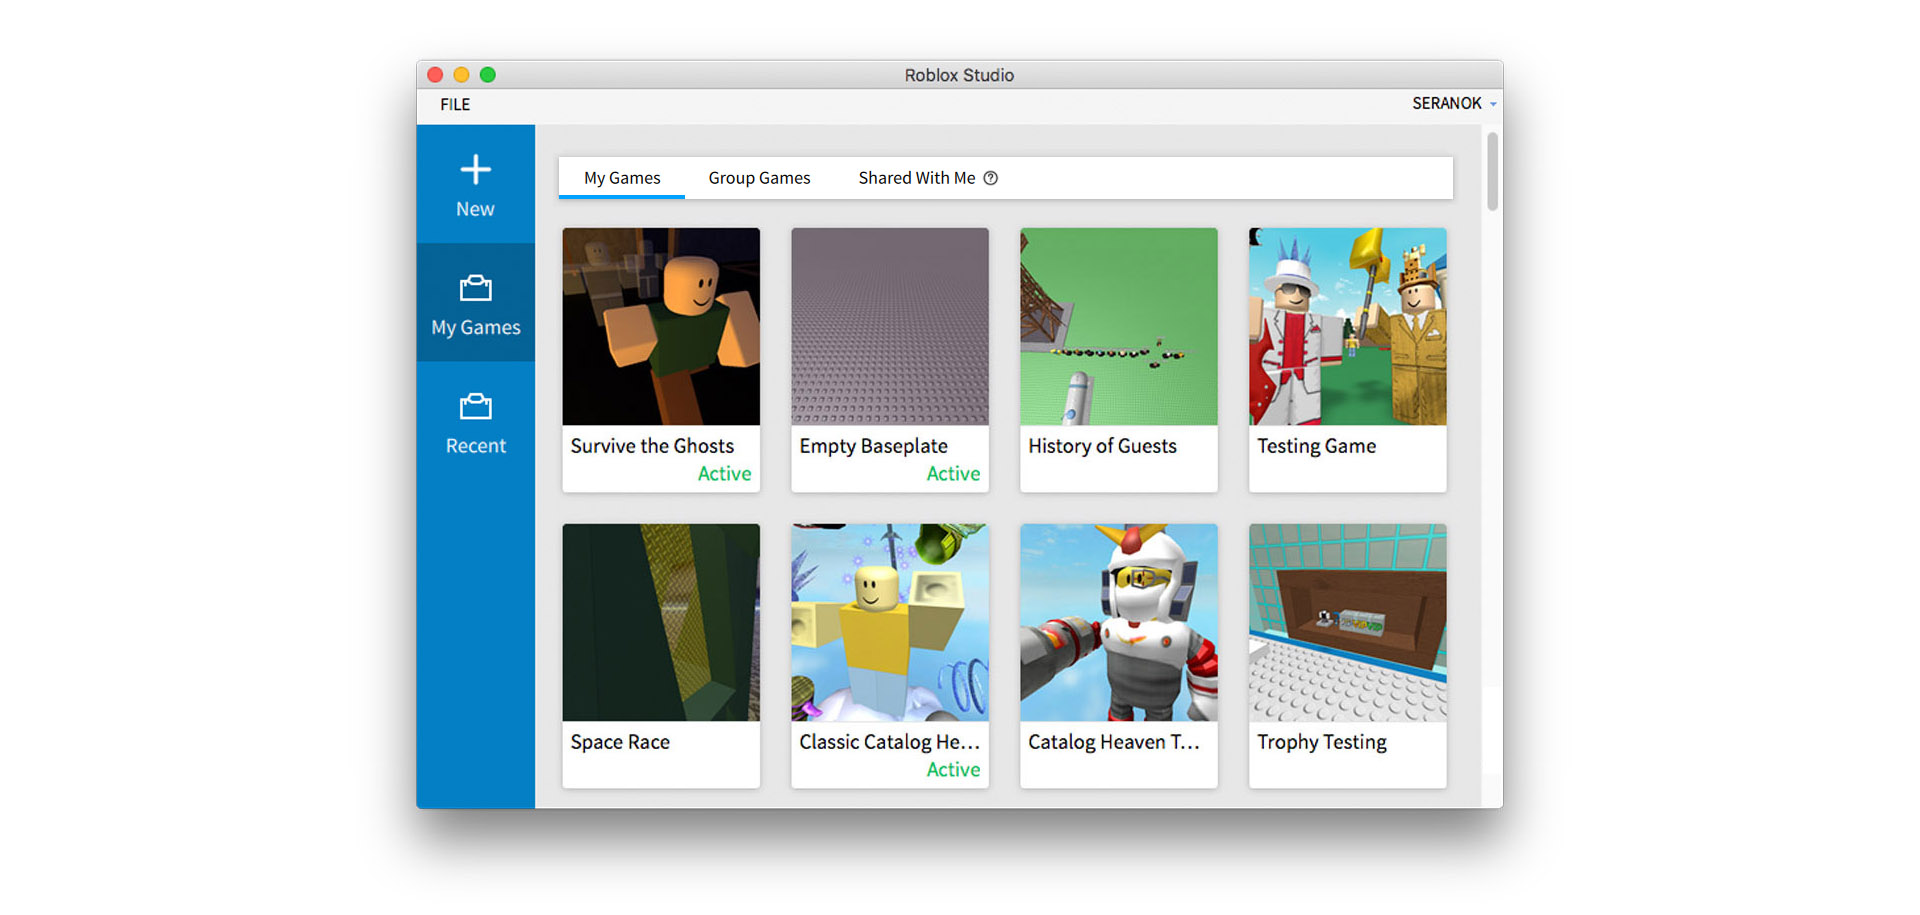 Roblox Studio S Start Screen Gets A Visual Upgrade More